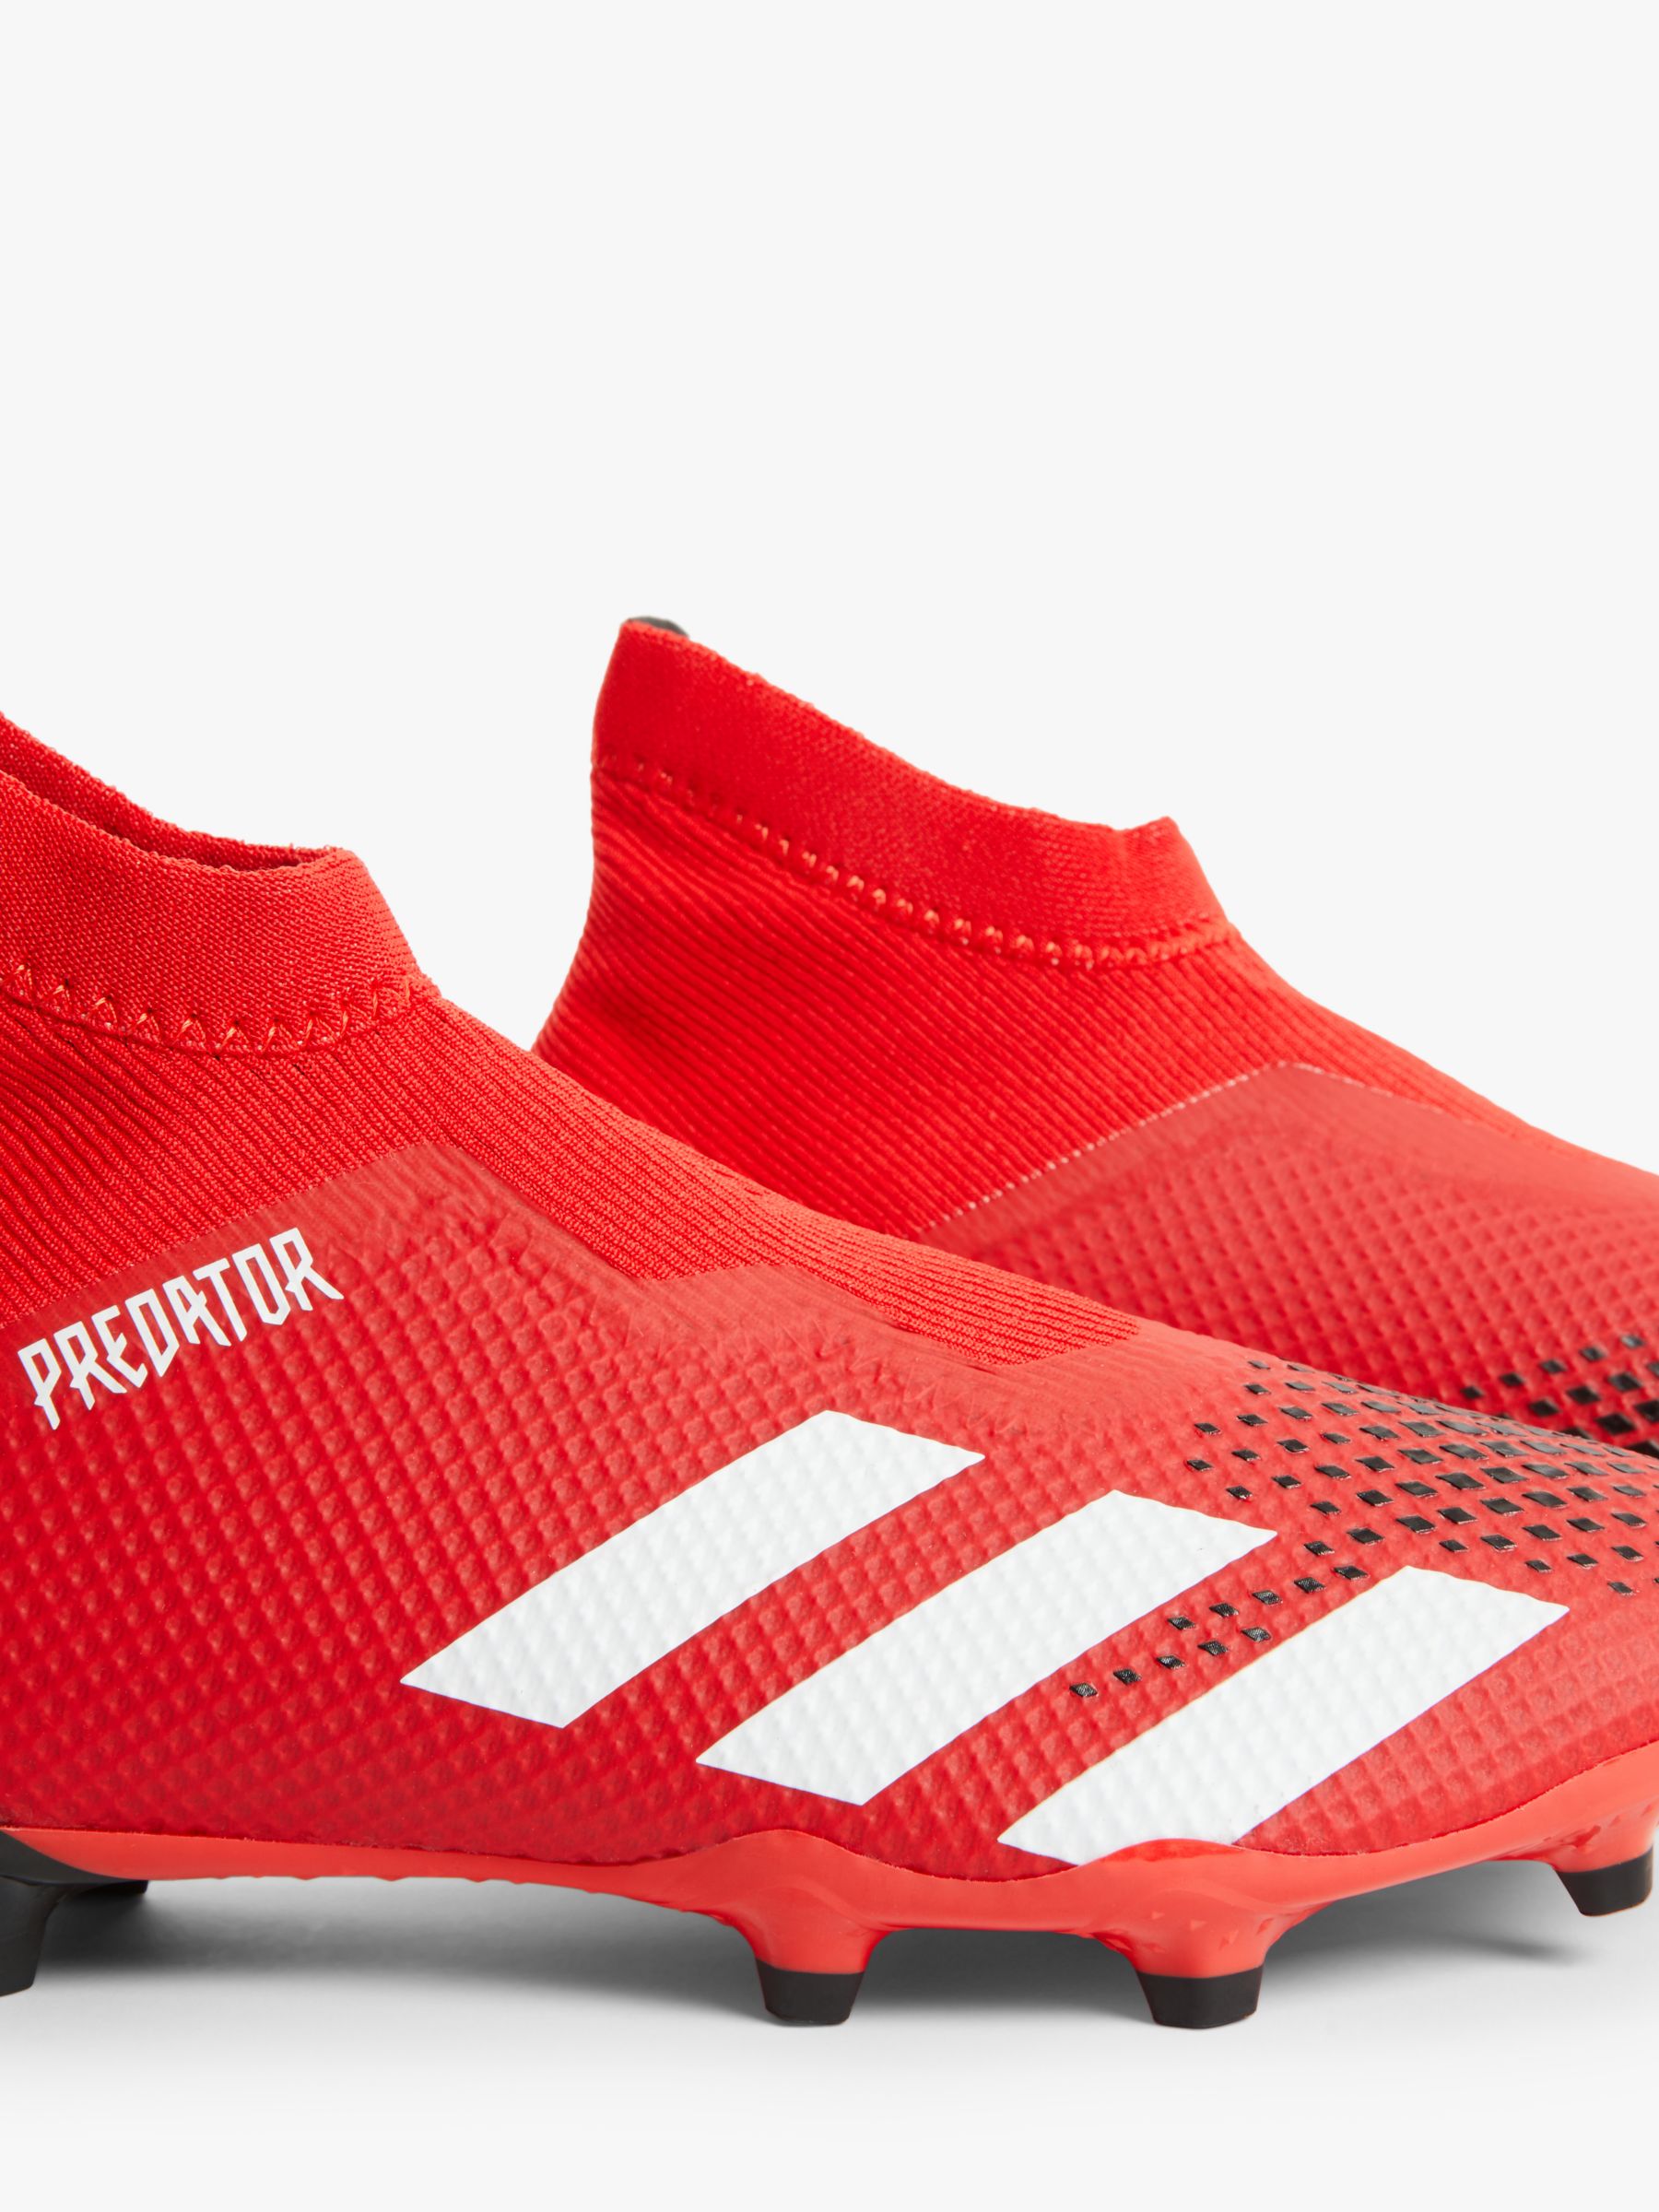 adidas predator football boots 2020